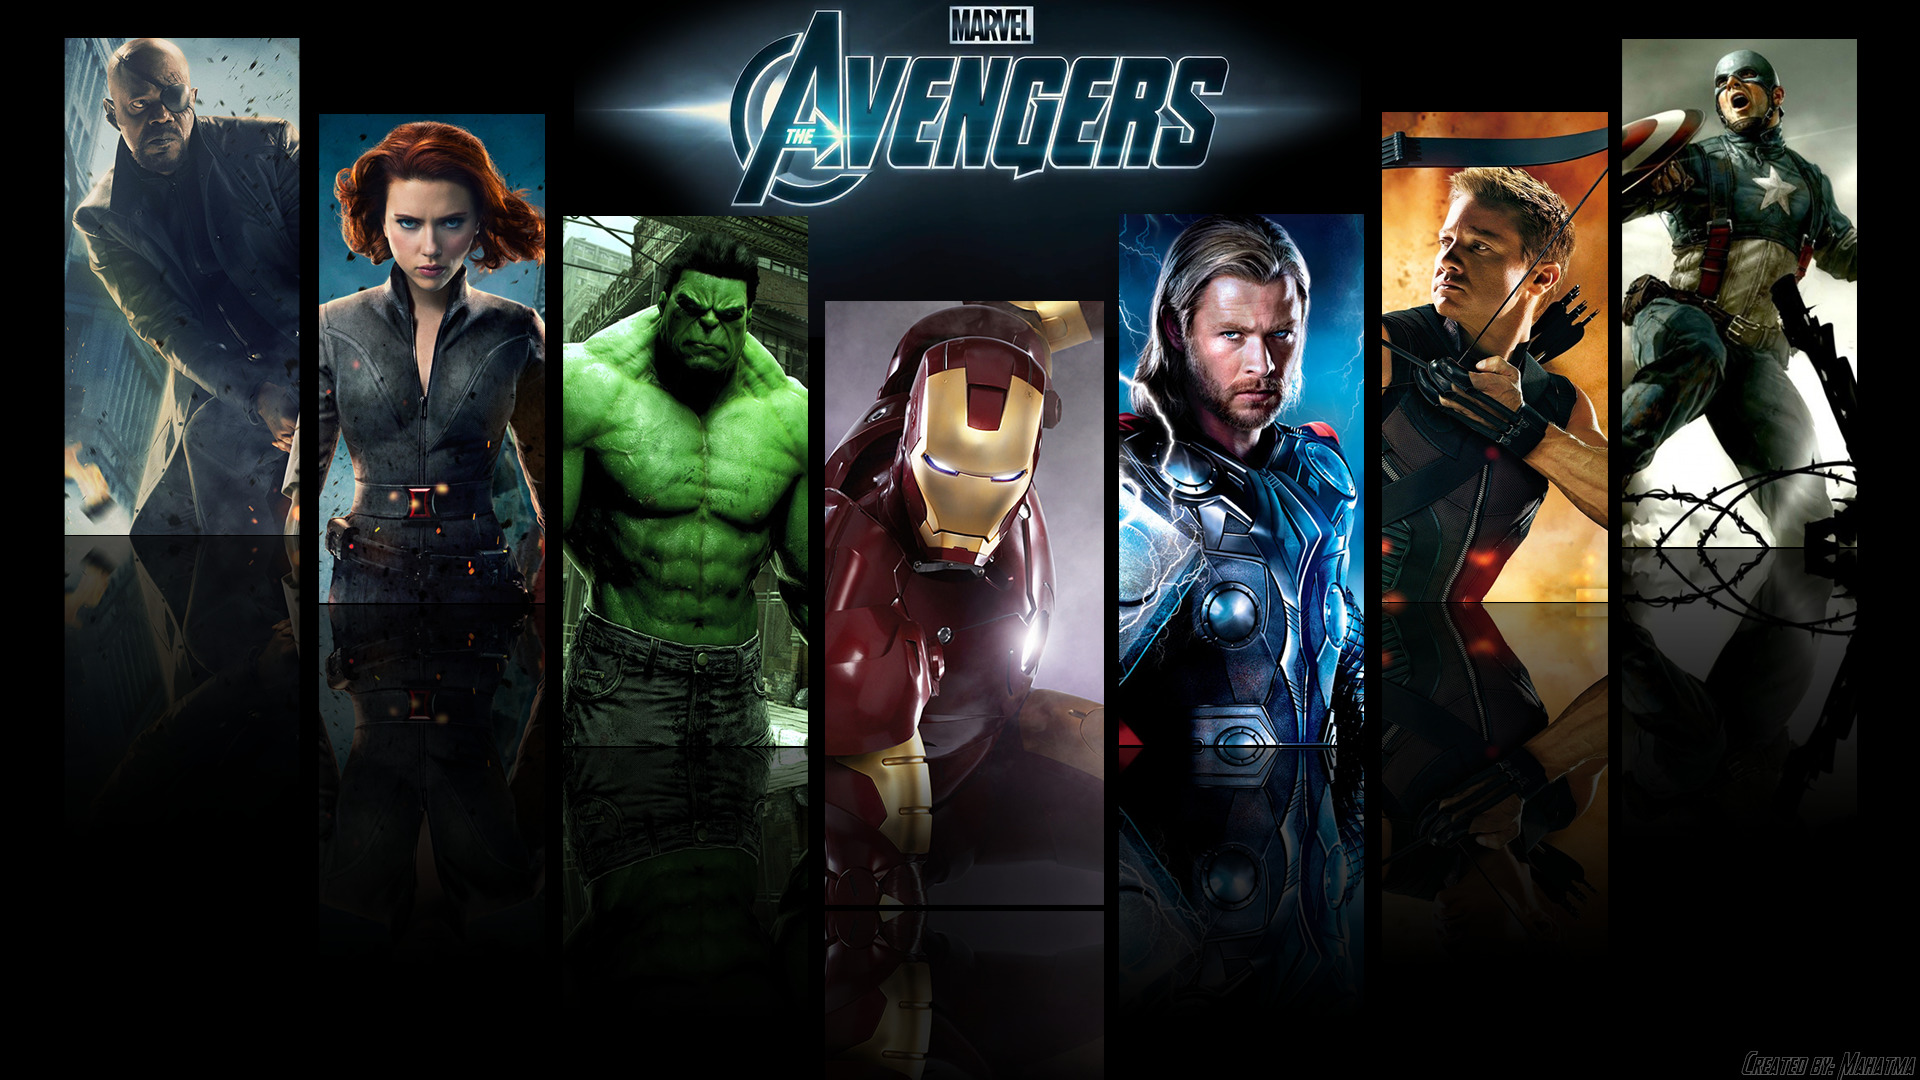 The Avengers, Hulk, Black Widow, Nick Fury, Iron Man, Thor, Hawkeye